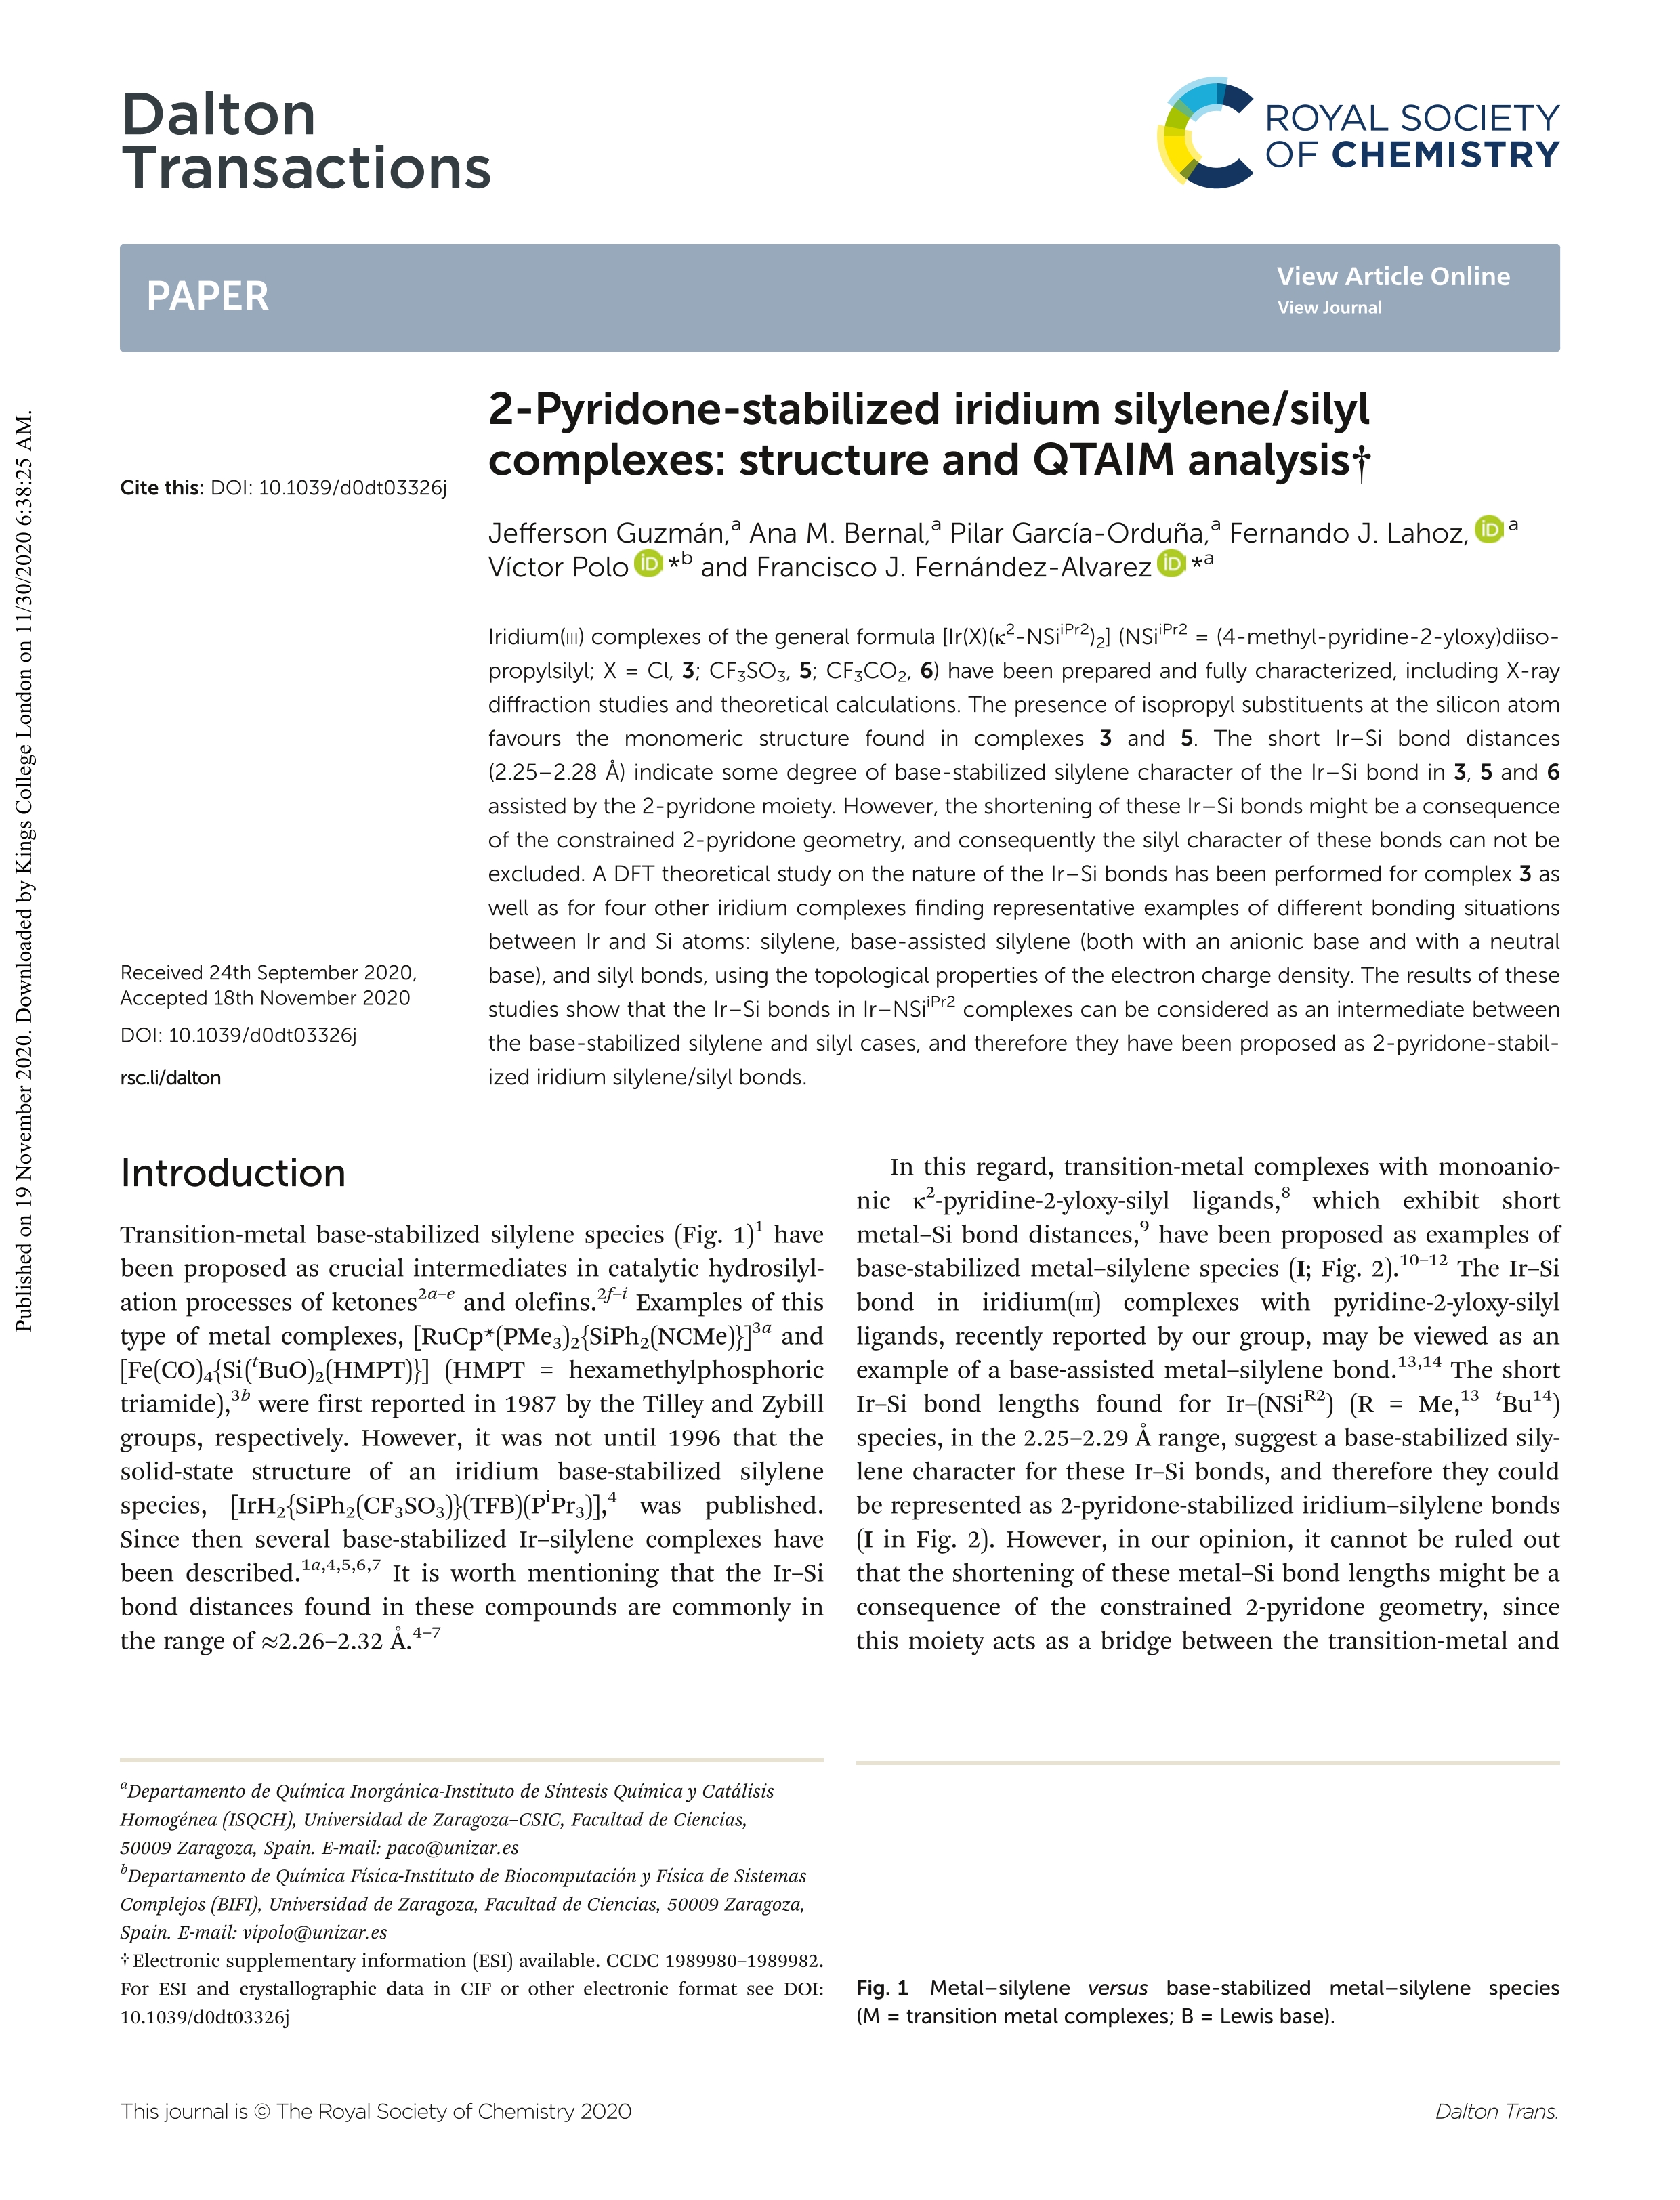 2-Pyridone-stabilized iridium silylene/silyl complexes: Structure and QTAIM analysis